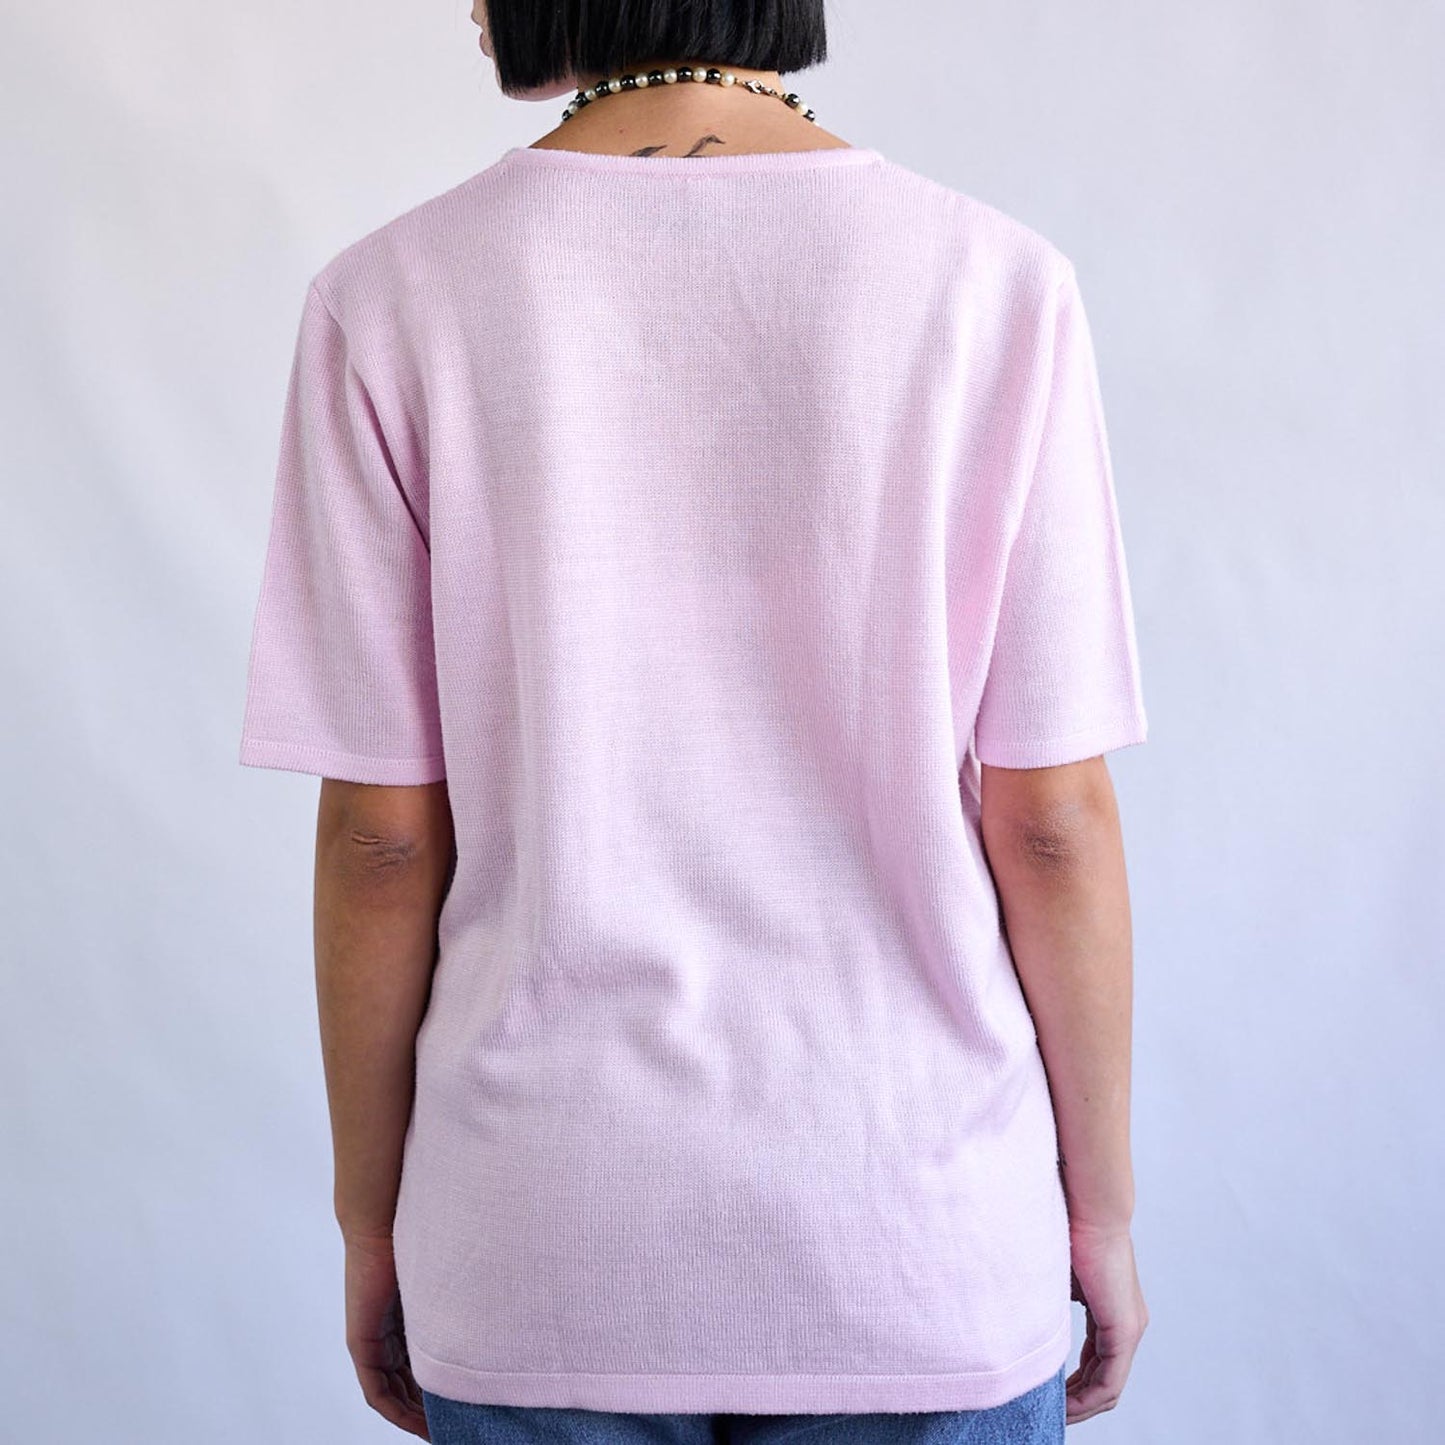 VIN-KNIT-11045 Vintage πλεκτή μπλούζα ροζ L-XL